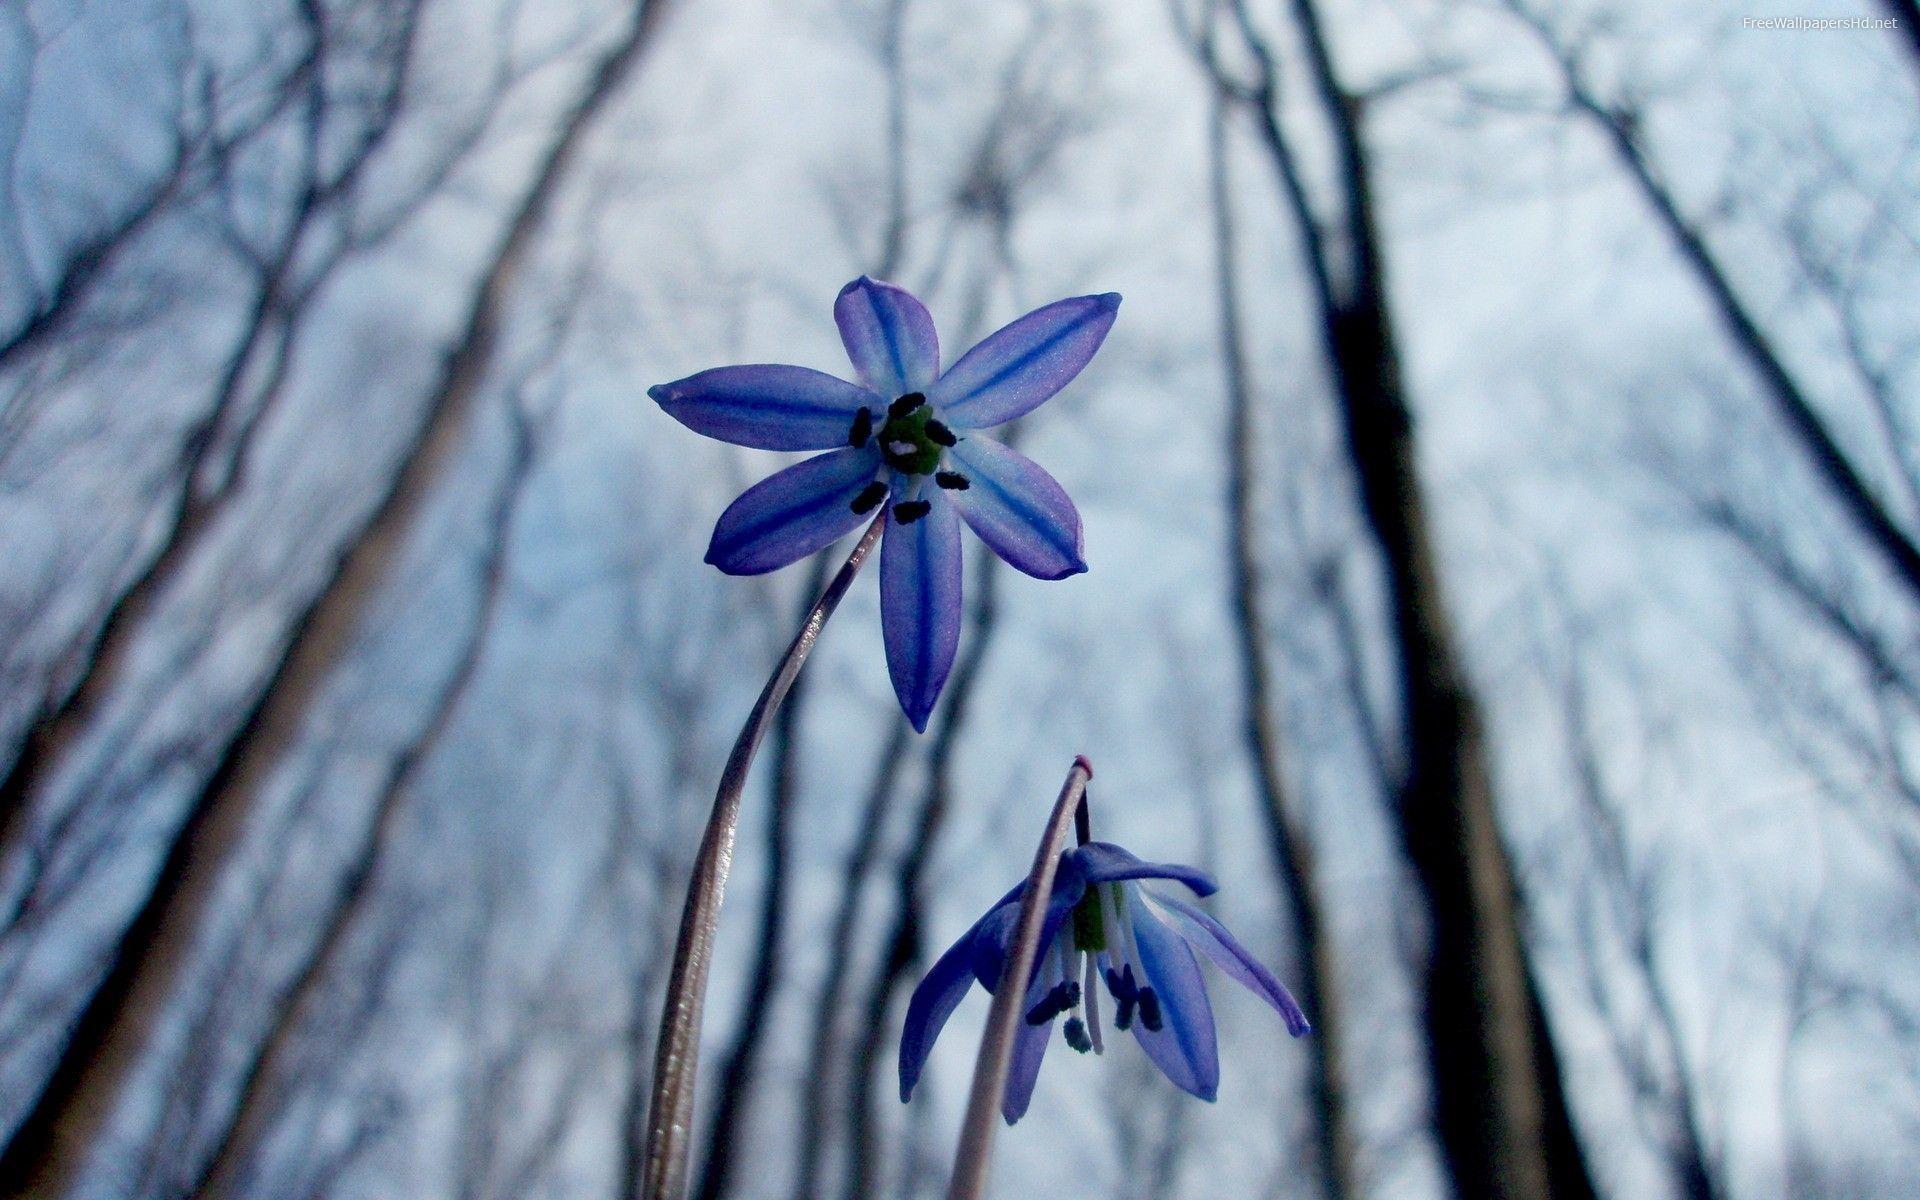 Winter Flower, High Definition, High Quality, Widescreen